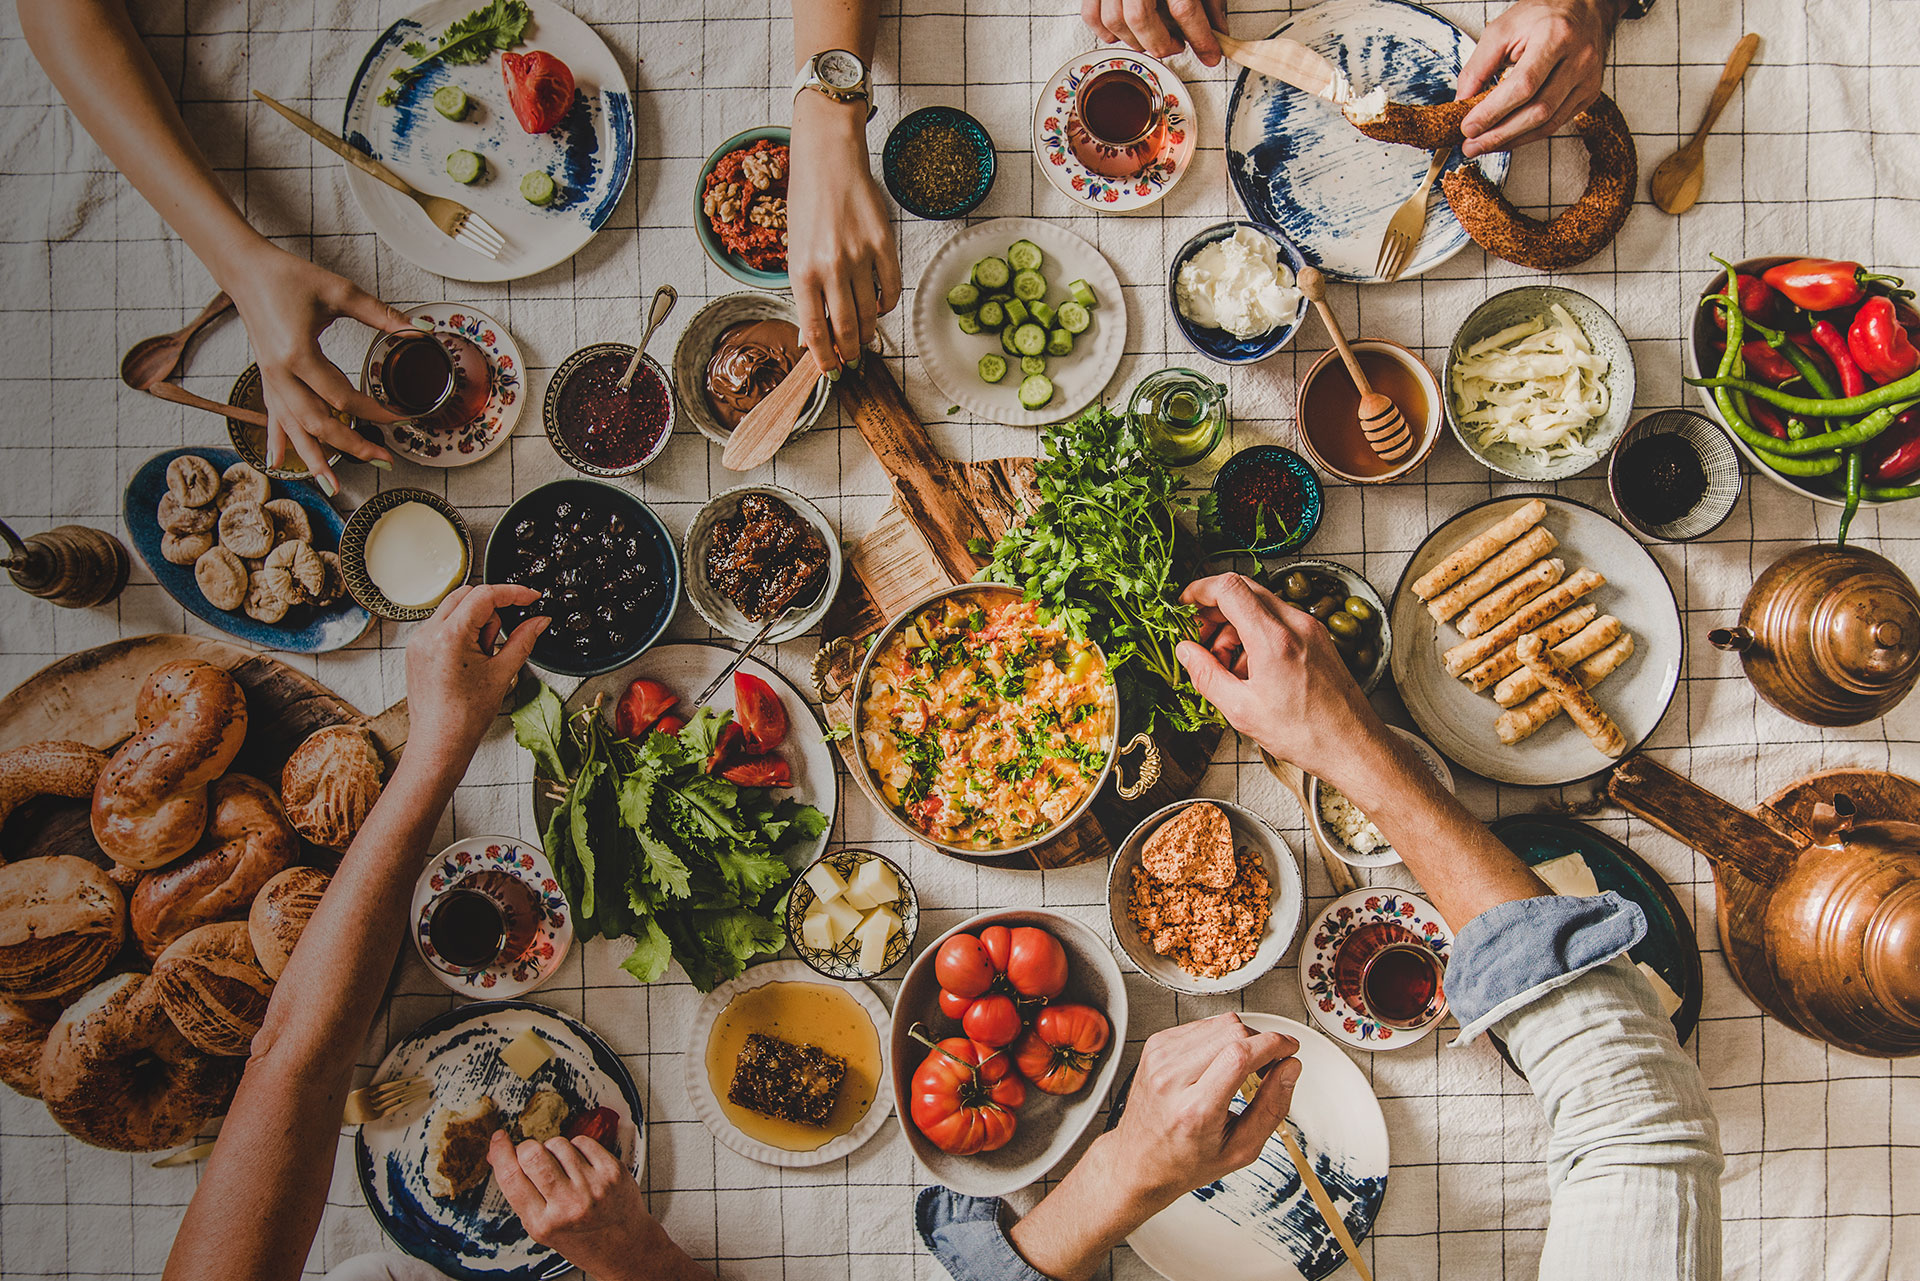 Scandinavia - Typical Coastal family dinner spread